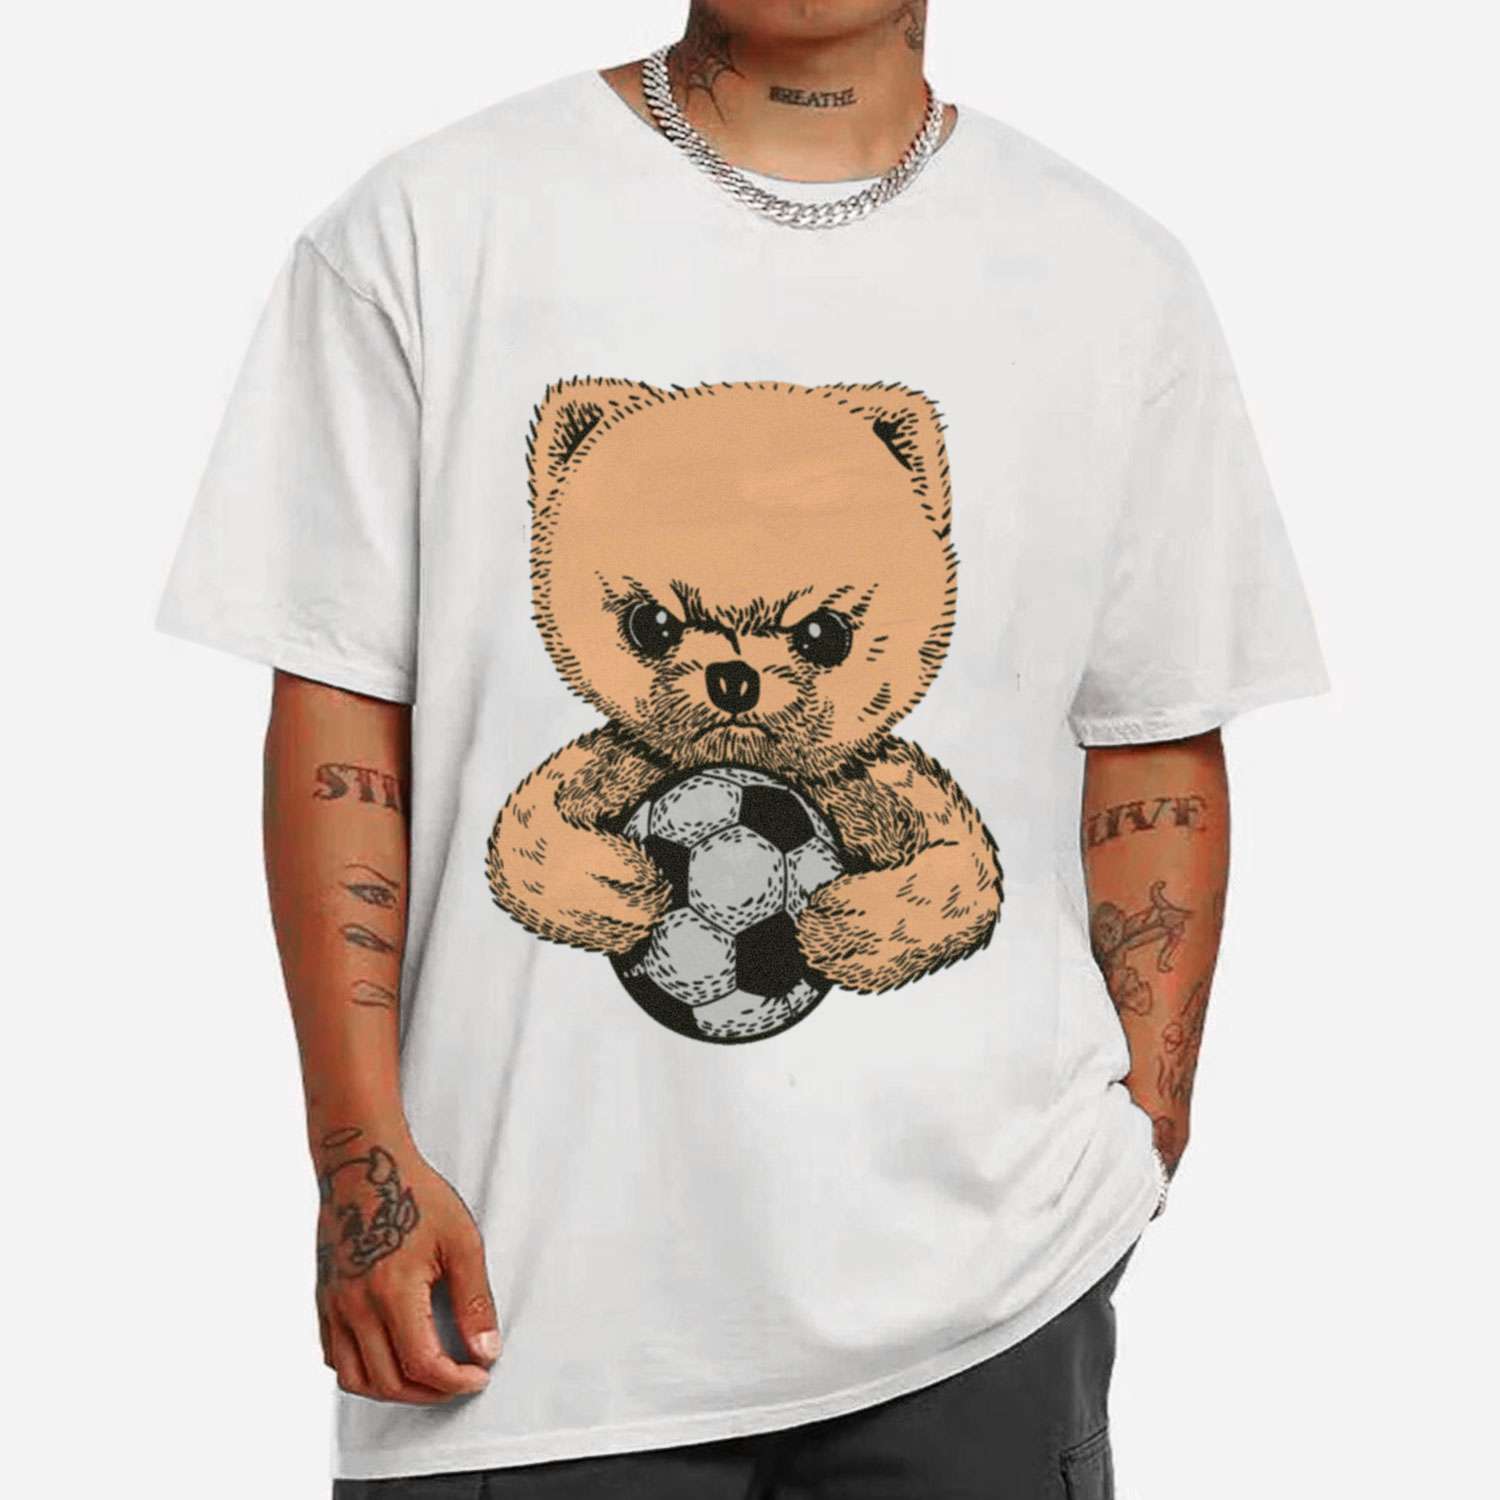 Angry Teddy Bear With Soccer Ball T-shirt